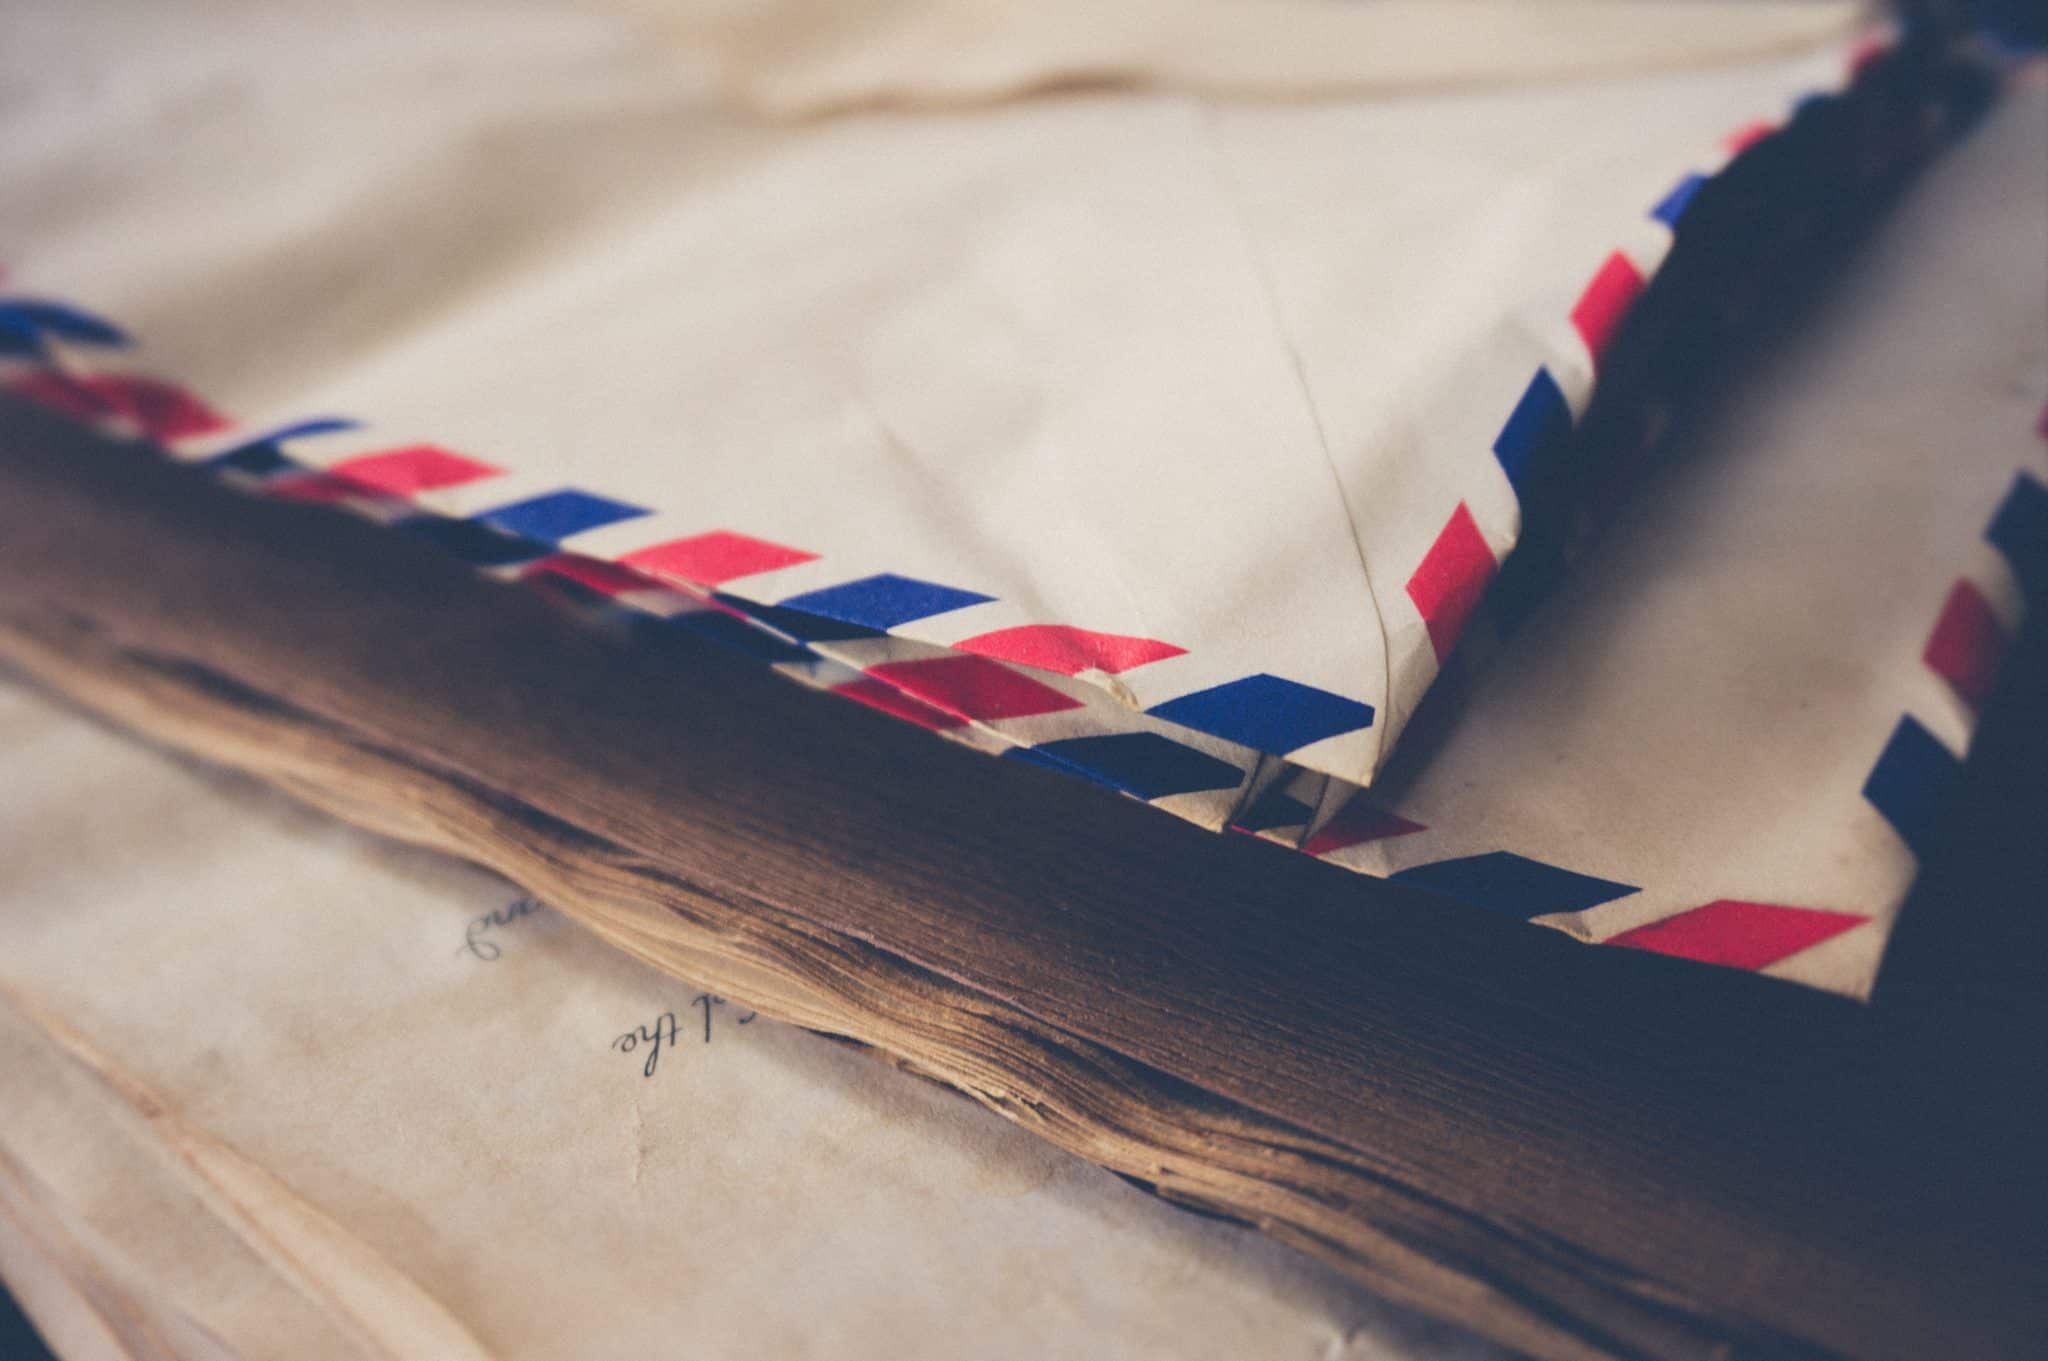 Pile of envelopes